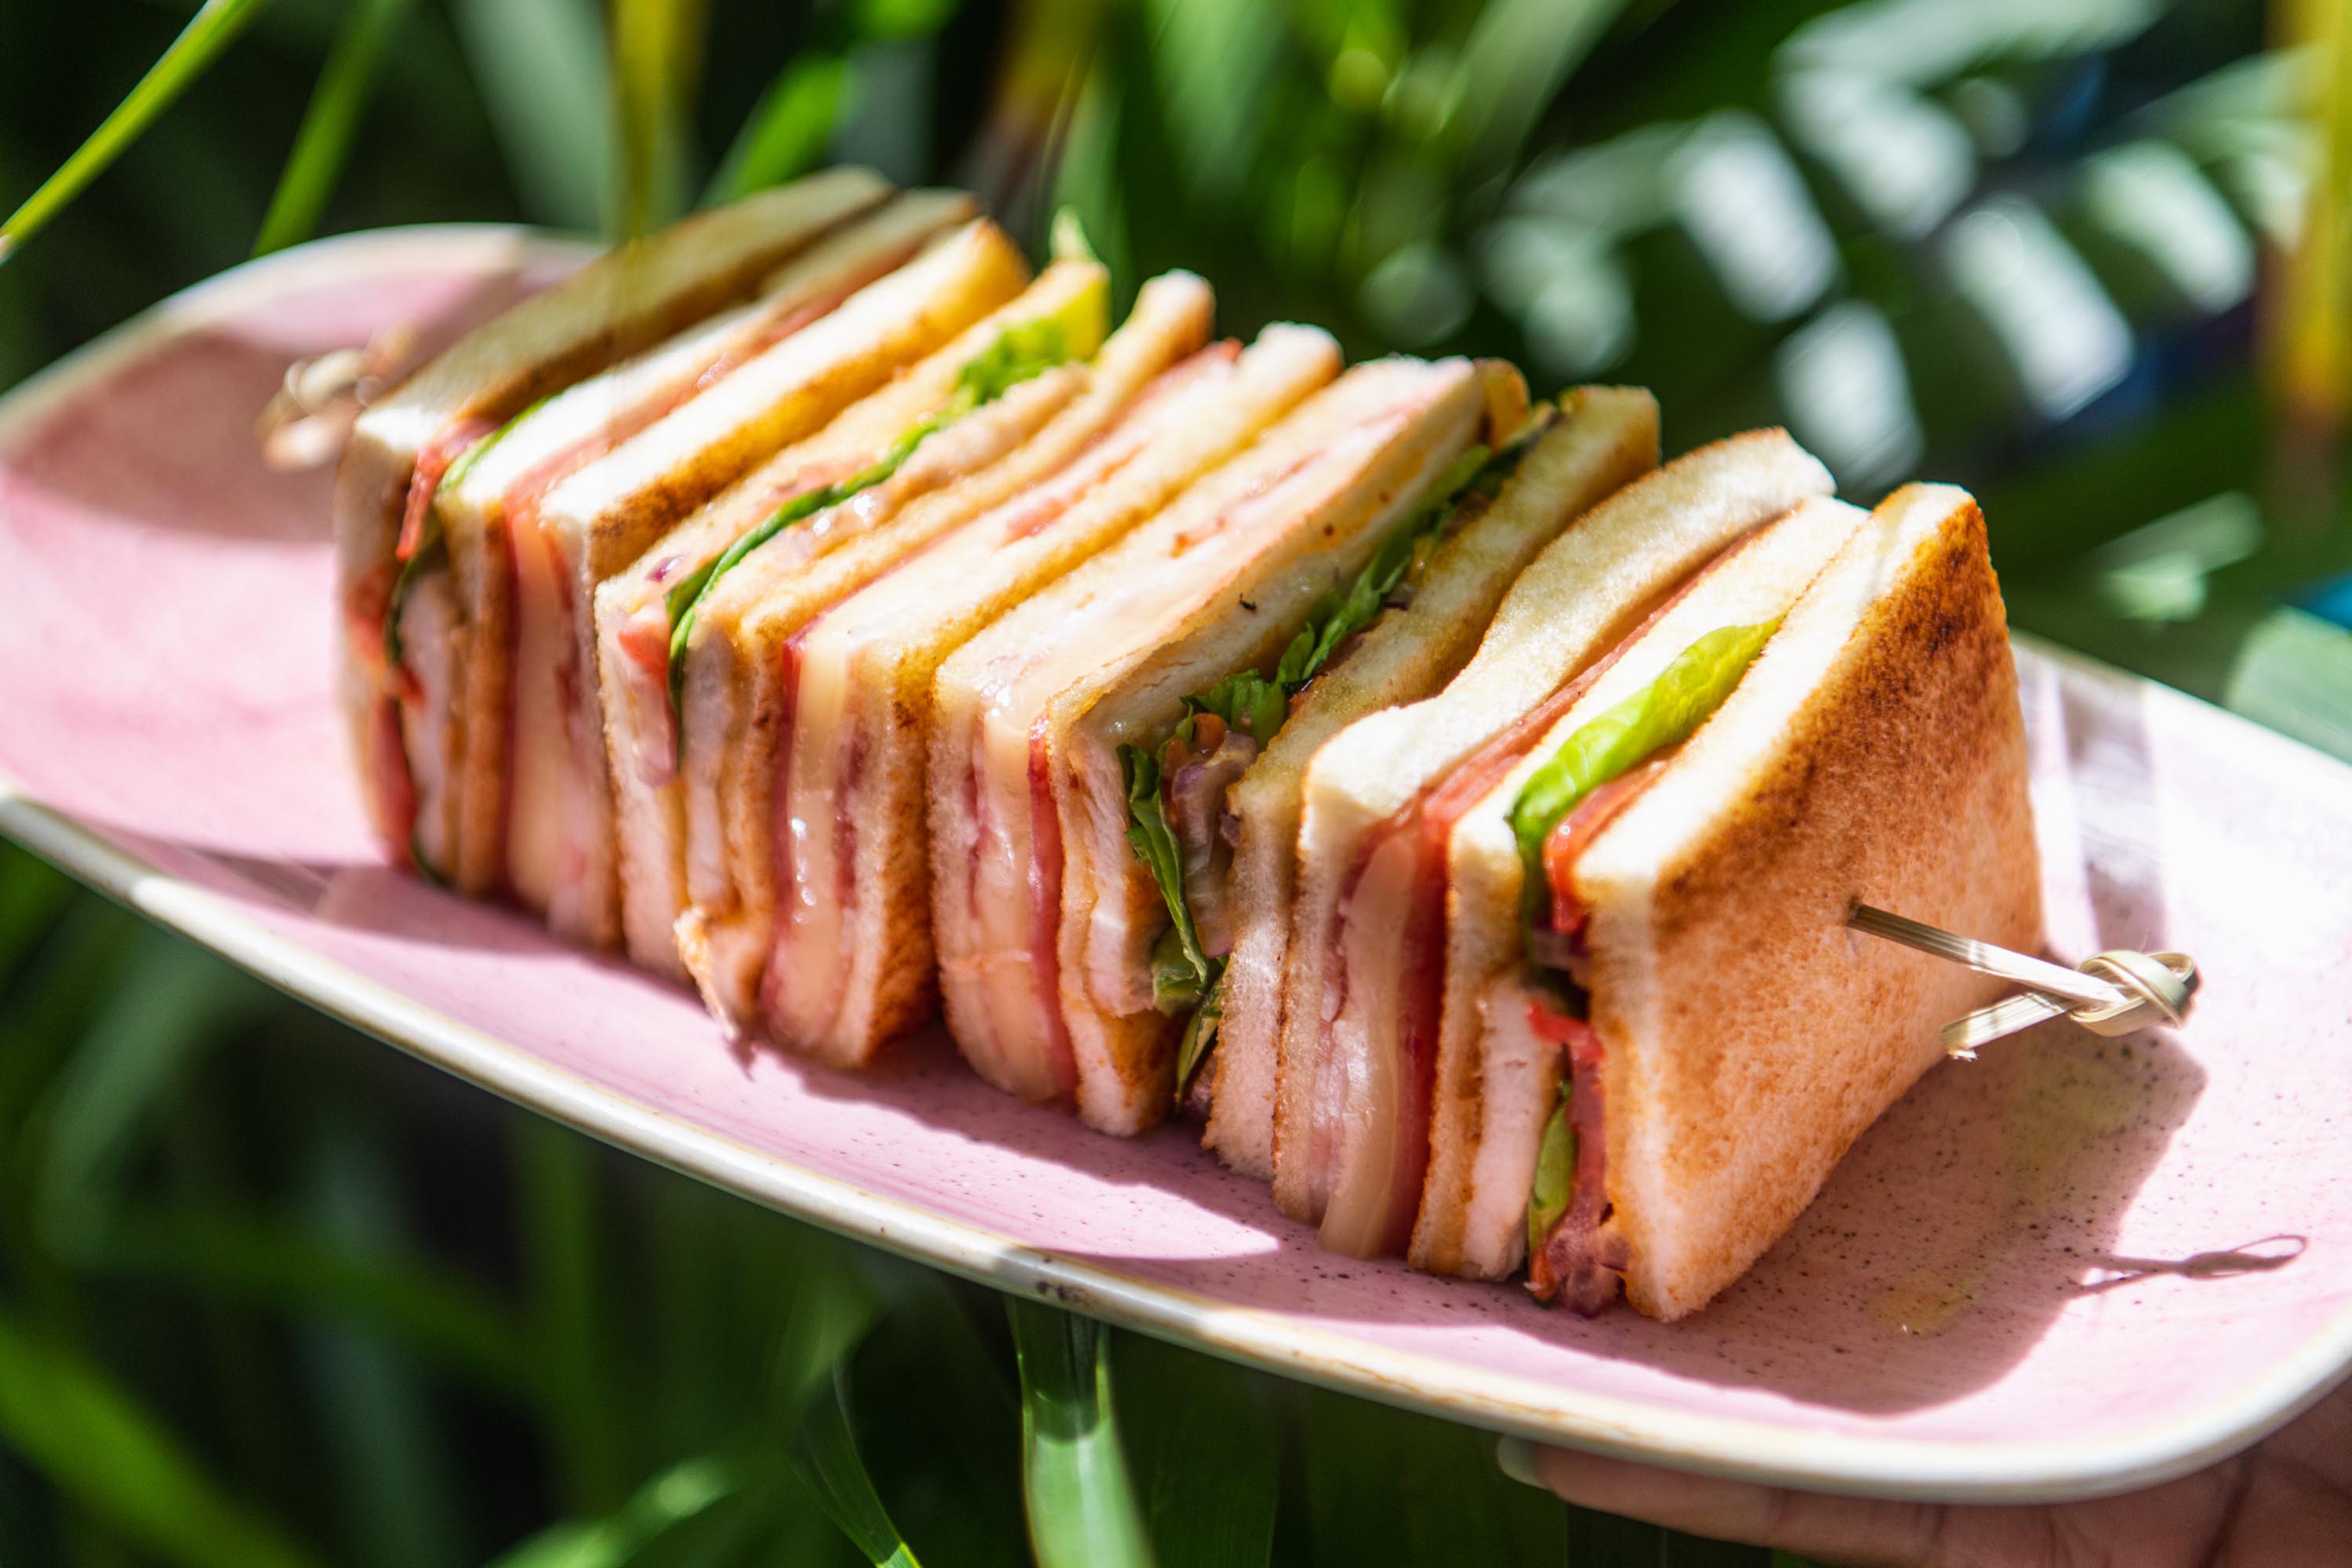 Club sandwich classico